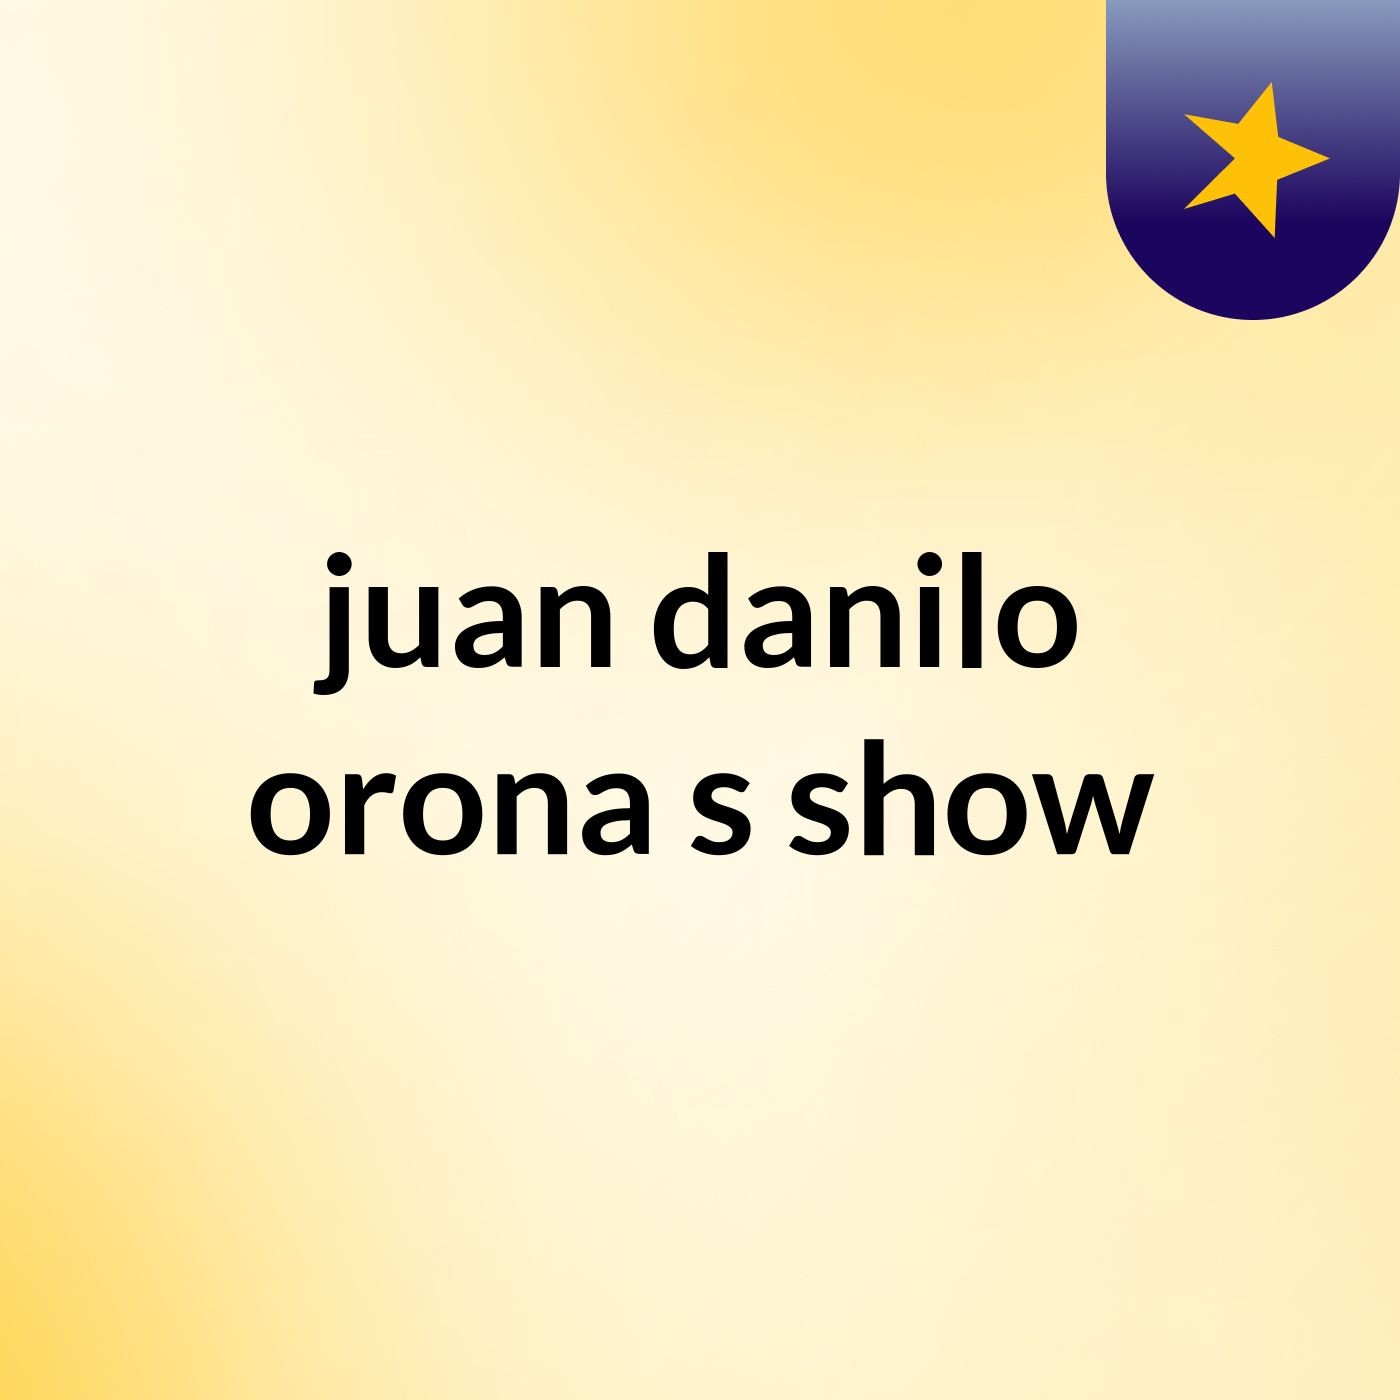 juan danilo orona's show